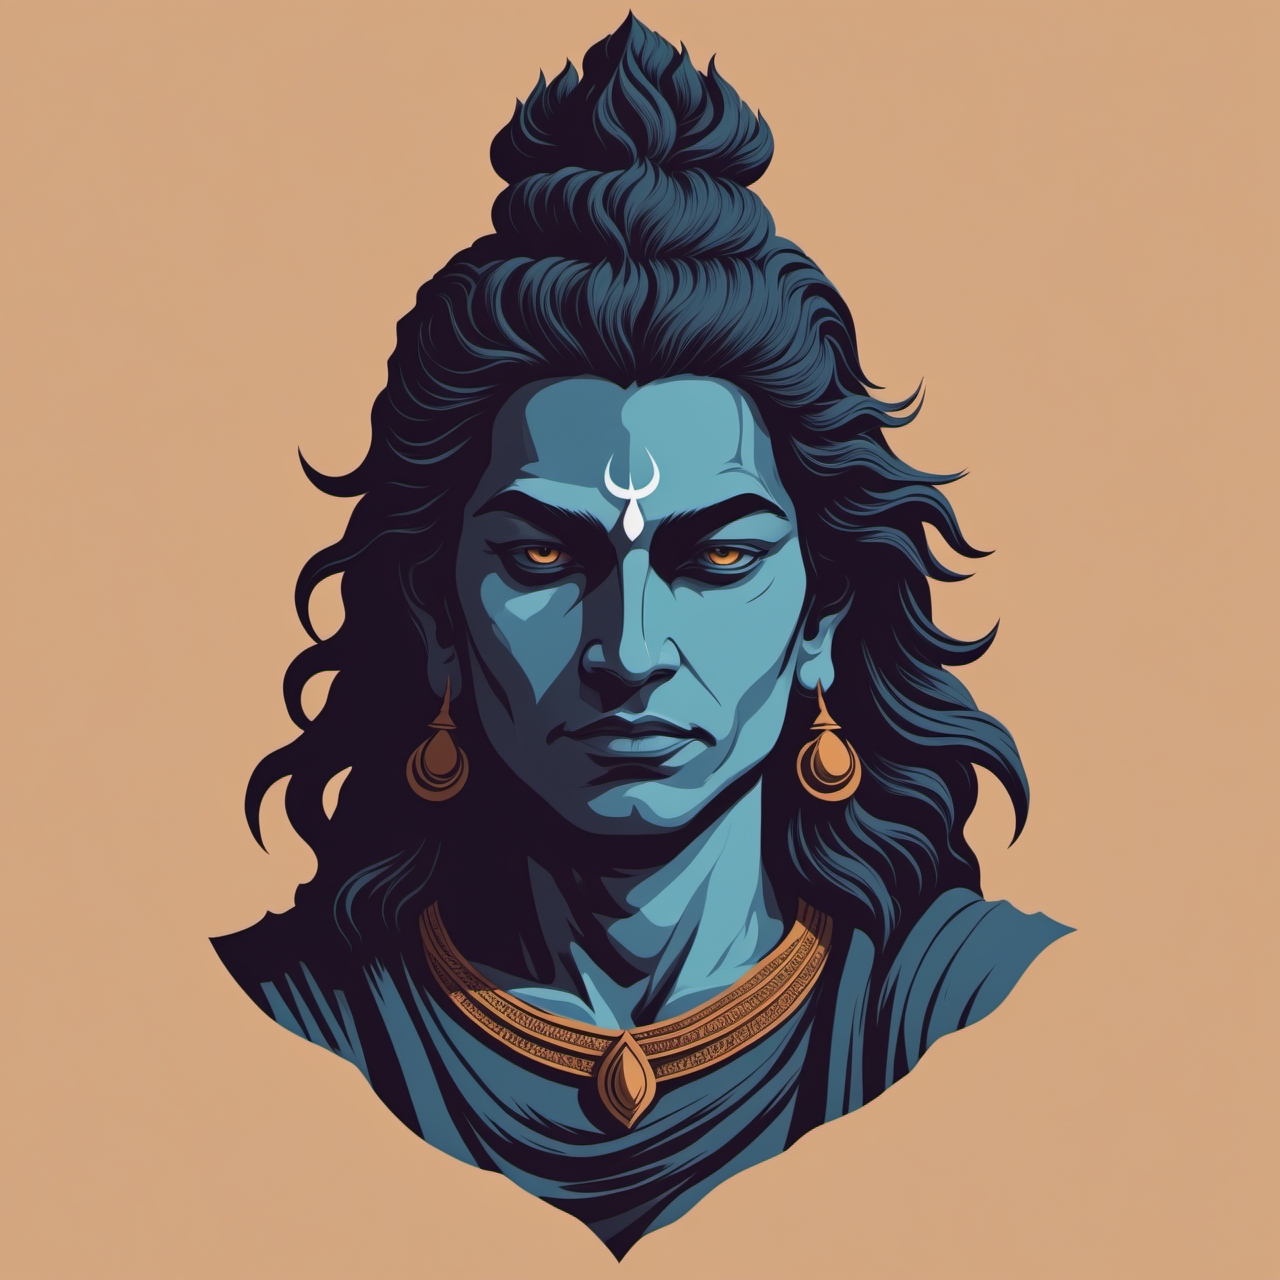 Angry Shiva Poster by Gurubasavaraj VR - Pixels